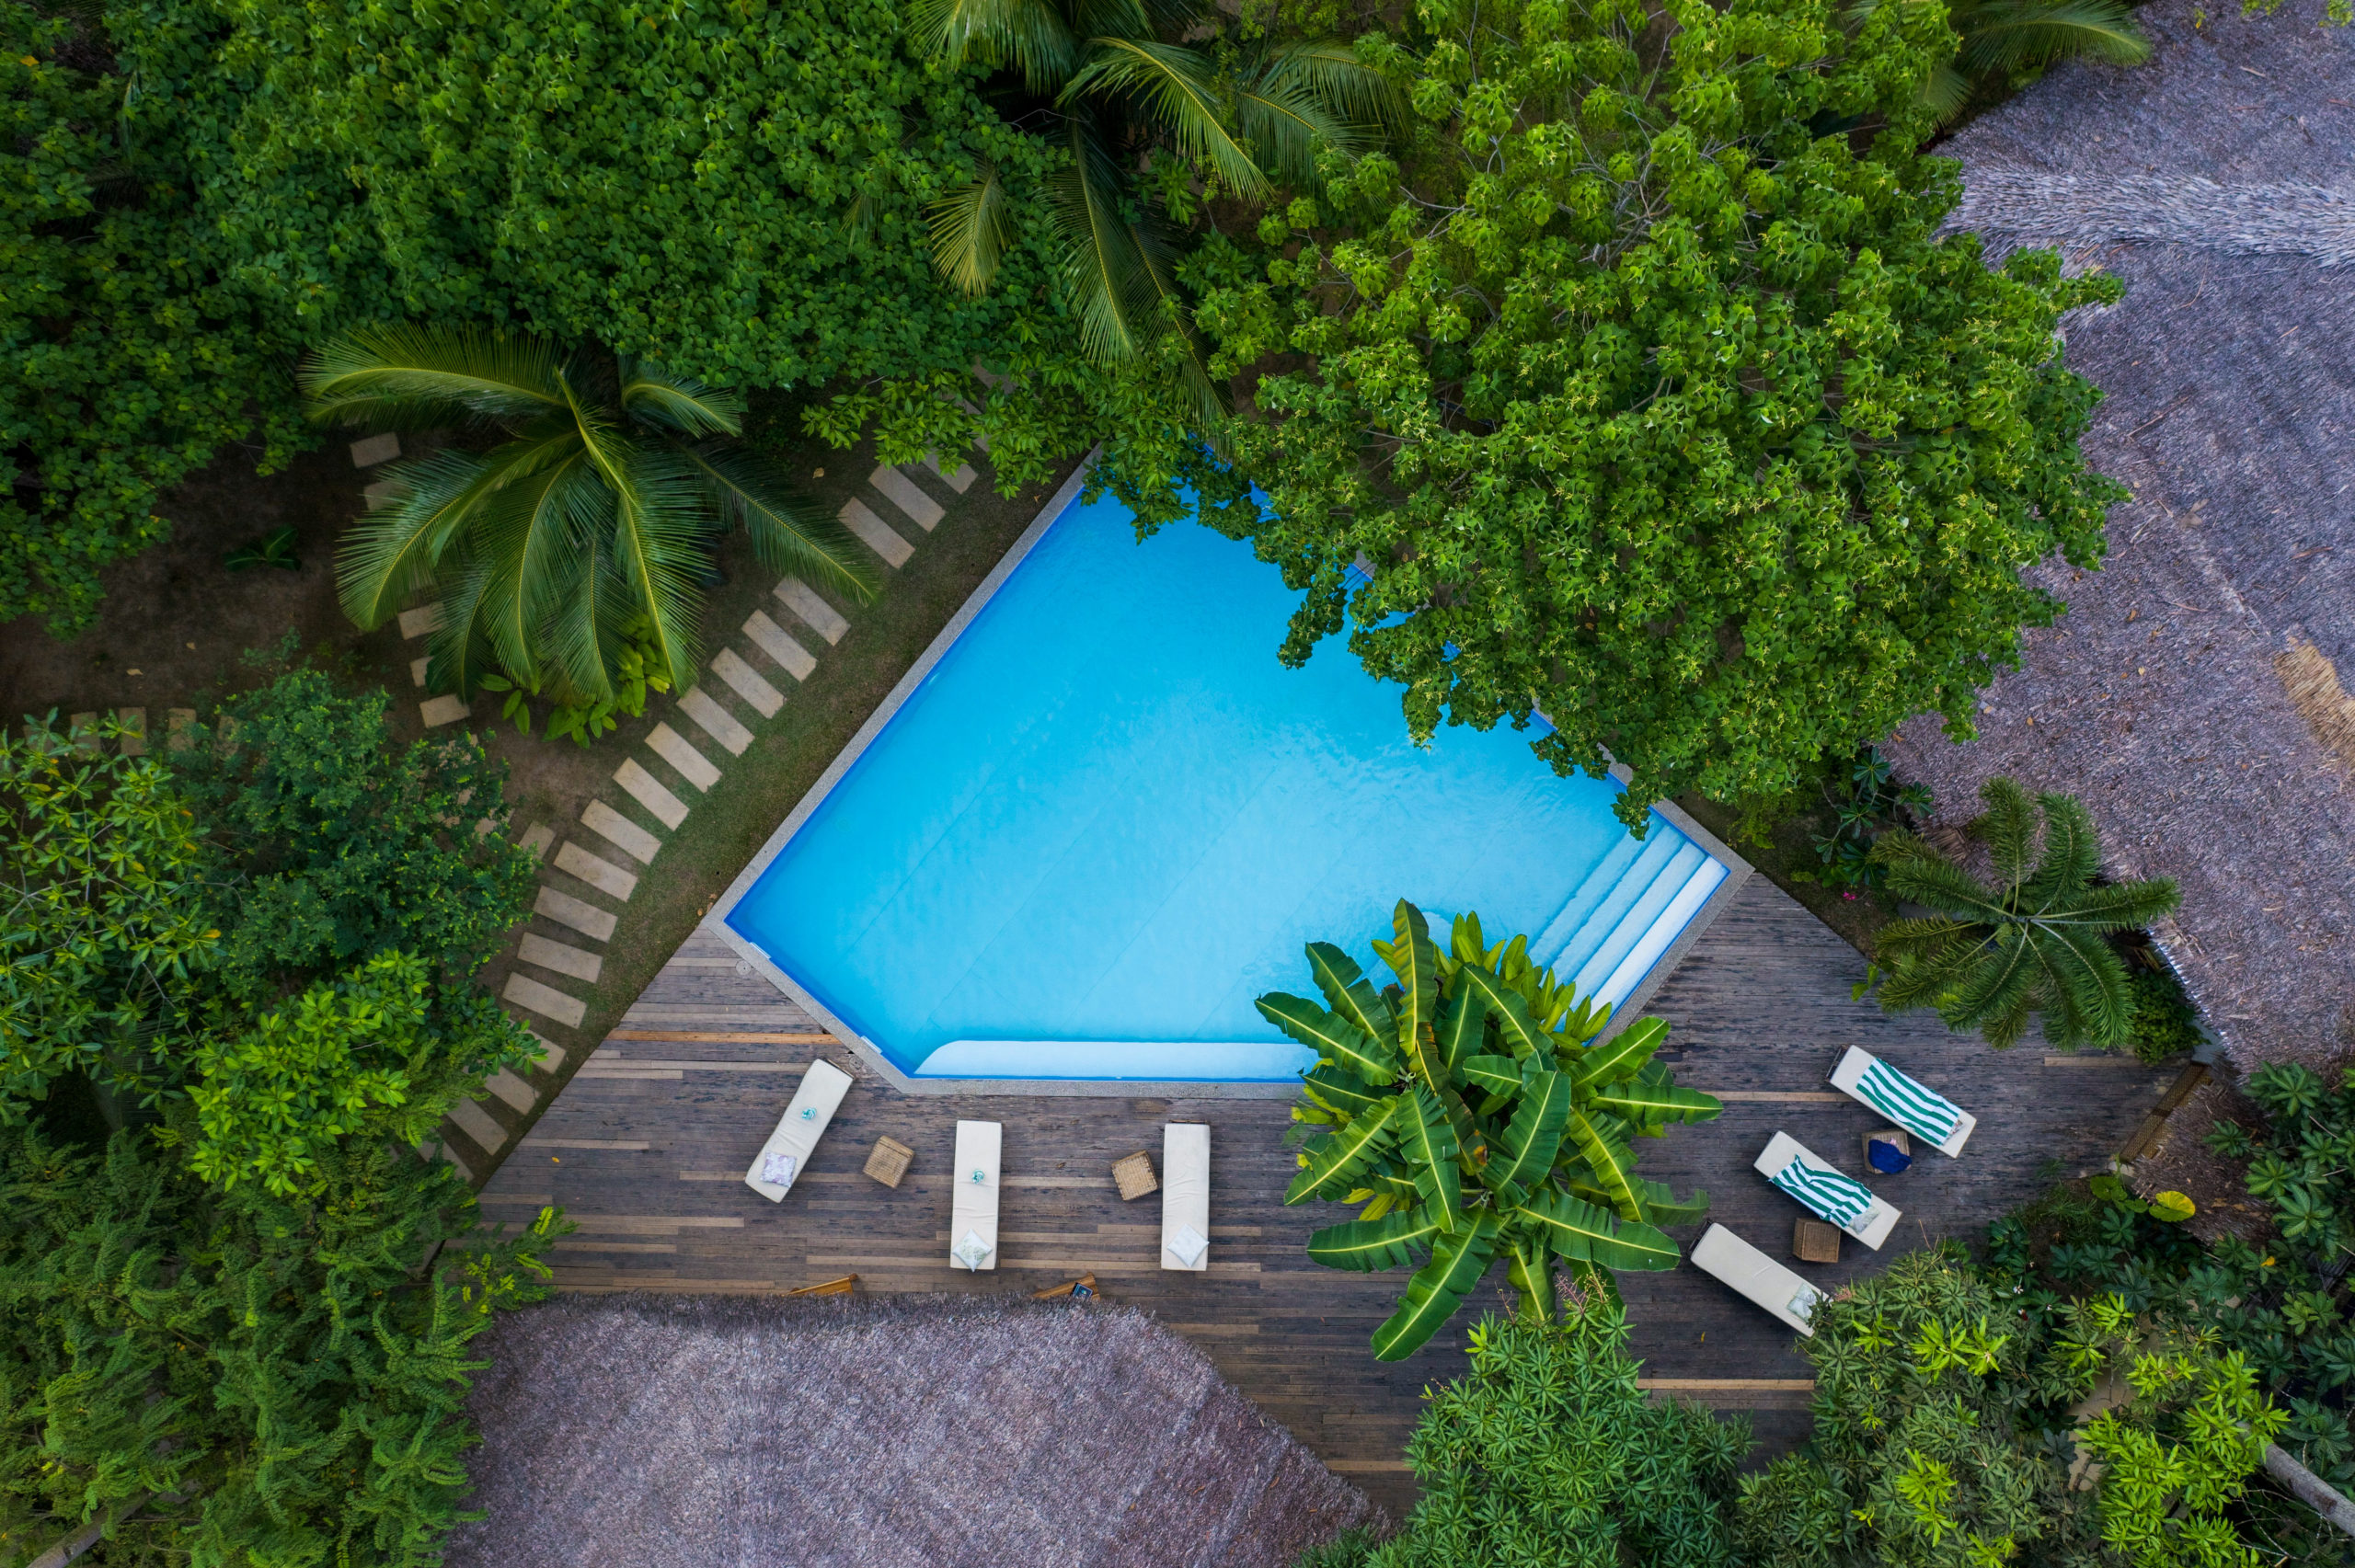 el nido hotels palawan philippines resorts luxe luxury